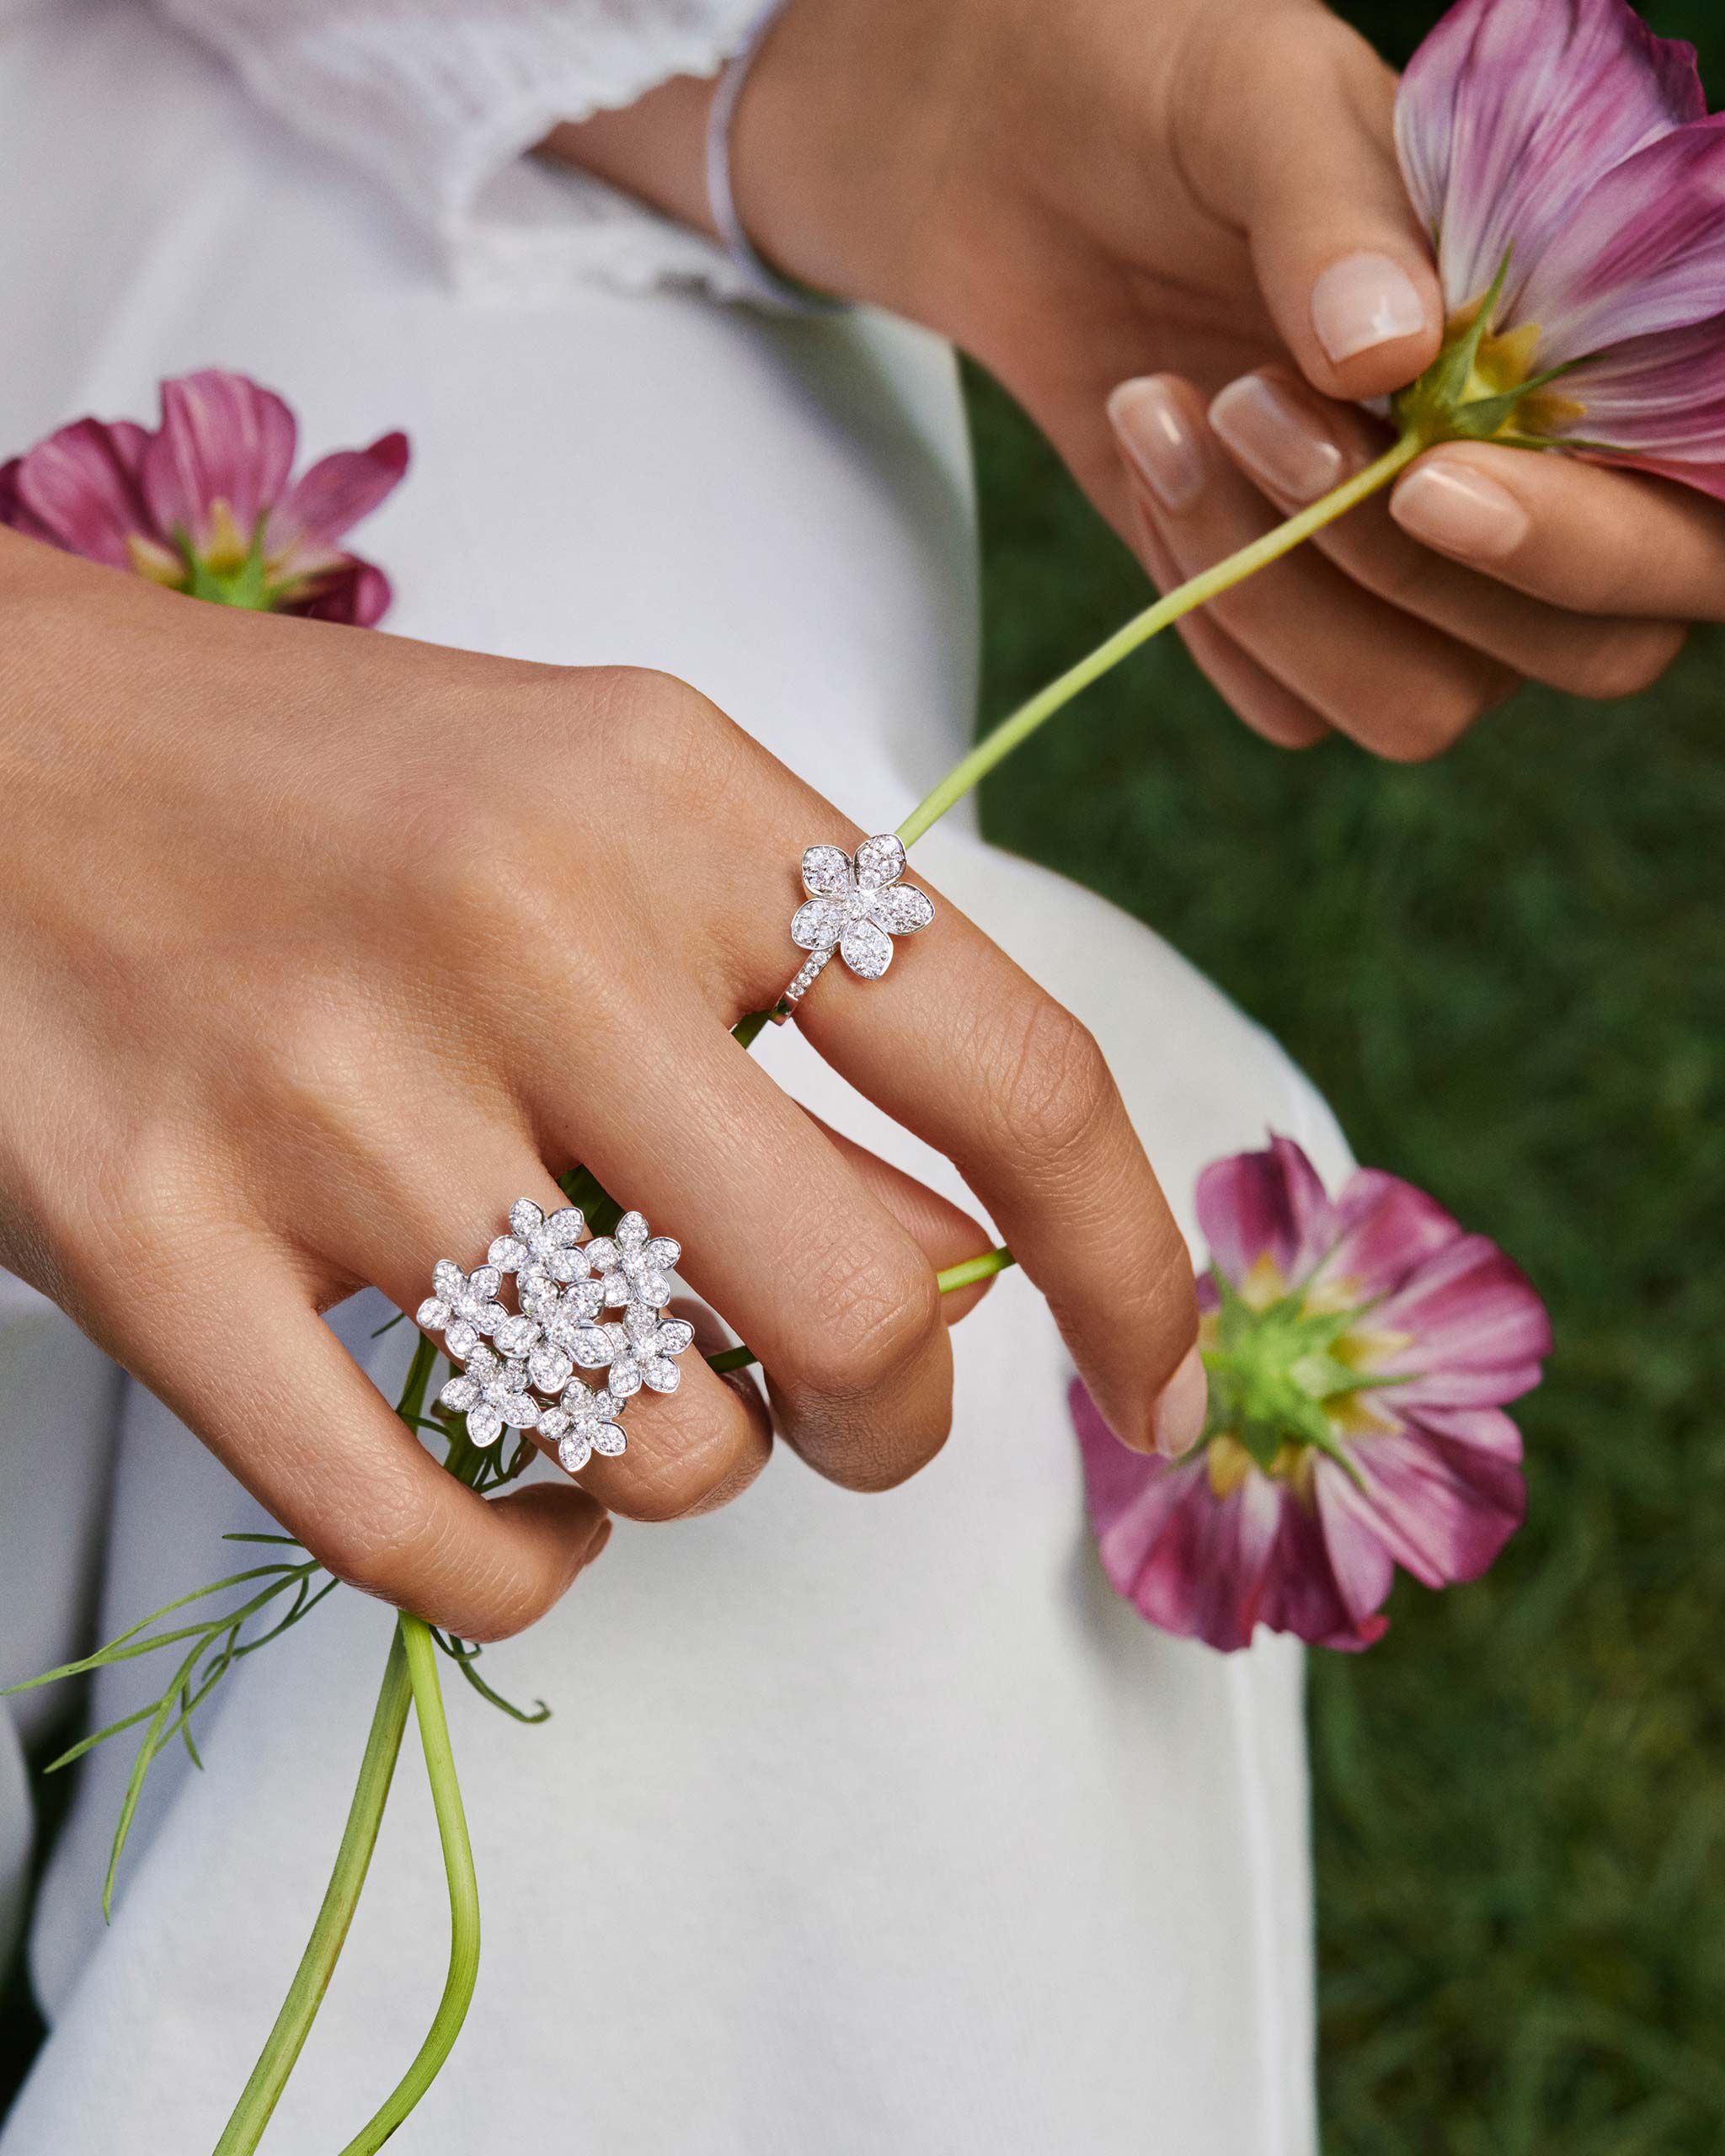 Model wear the Graff Wild Flower collection diamond rings